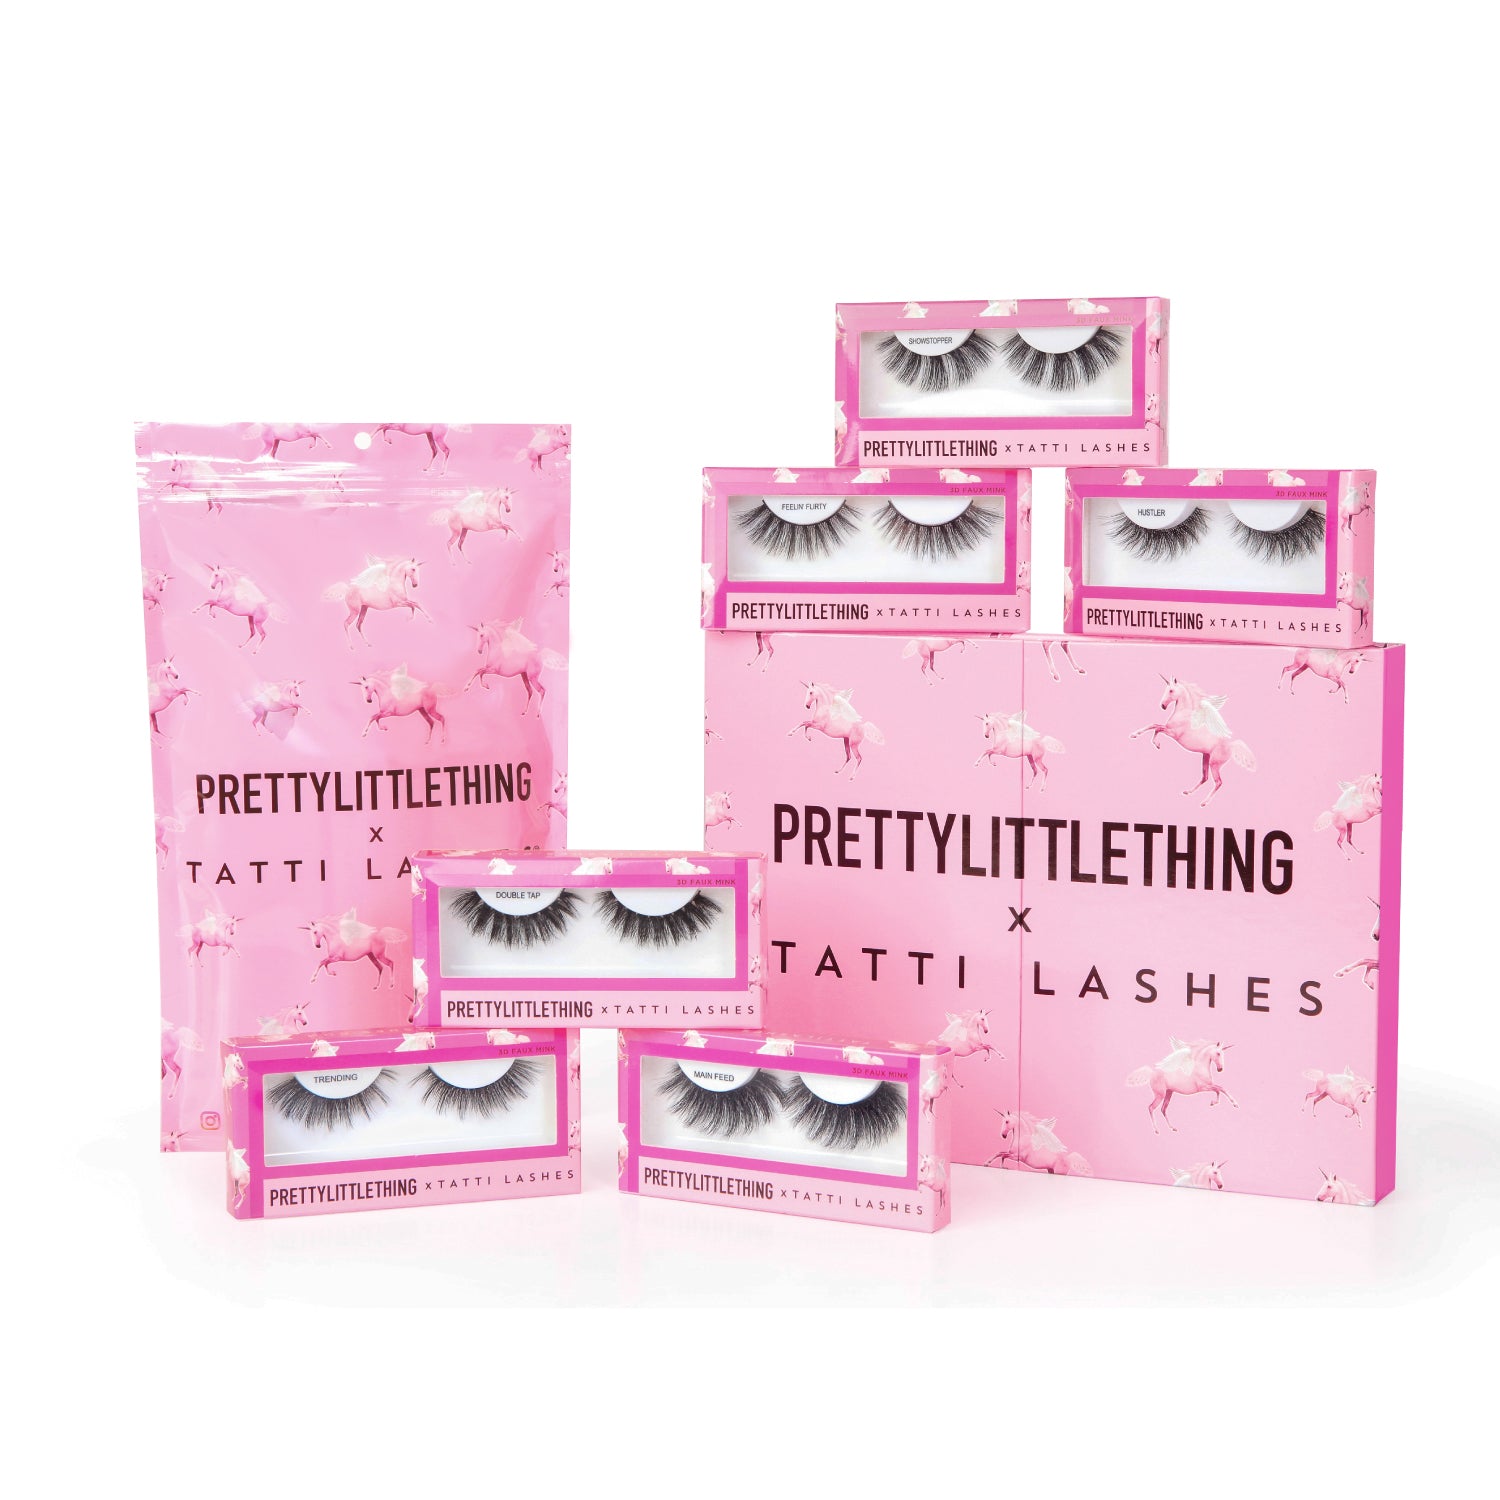 PRETTYLITTLETHING x Tatti Lashes Ultimate Gift Set